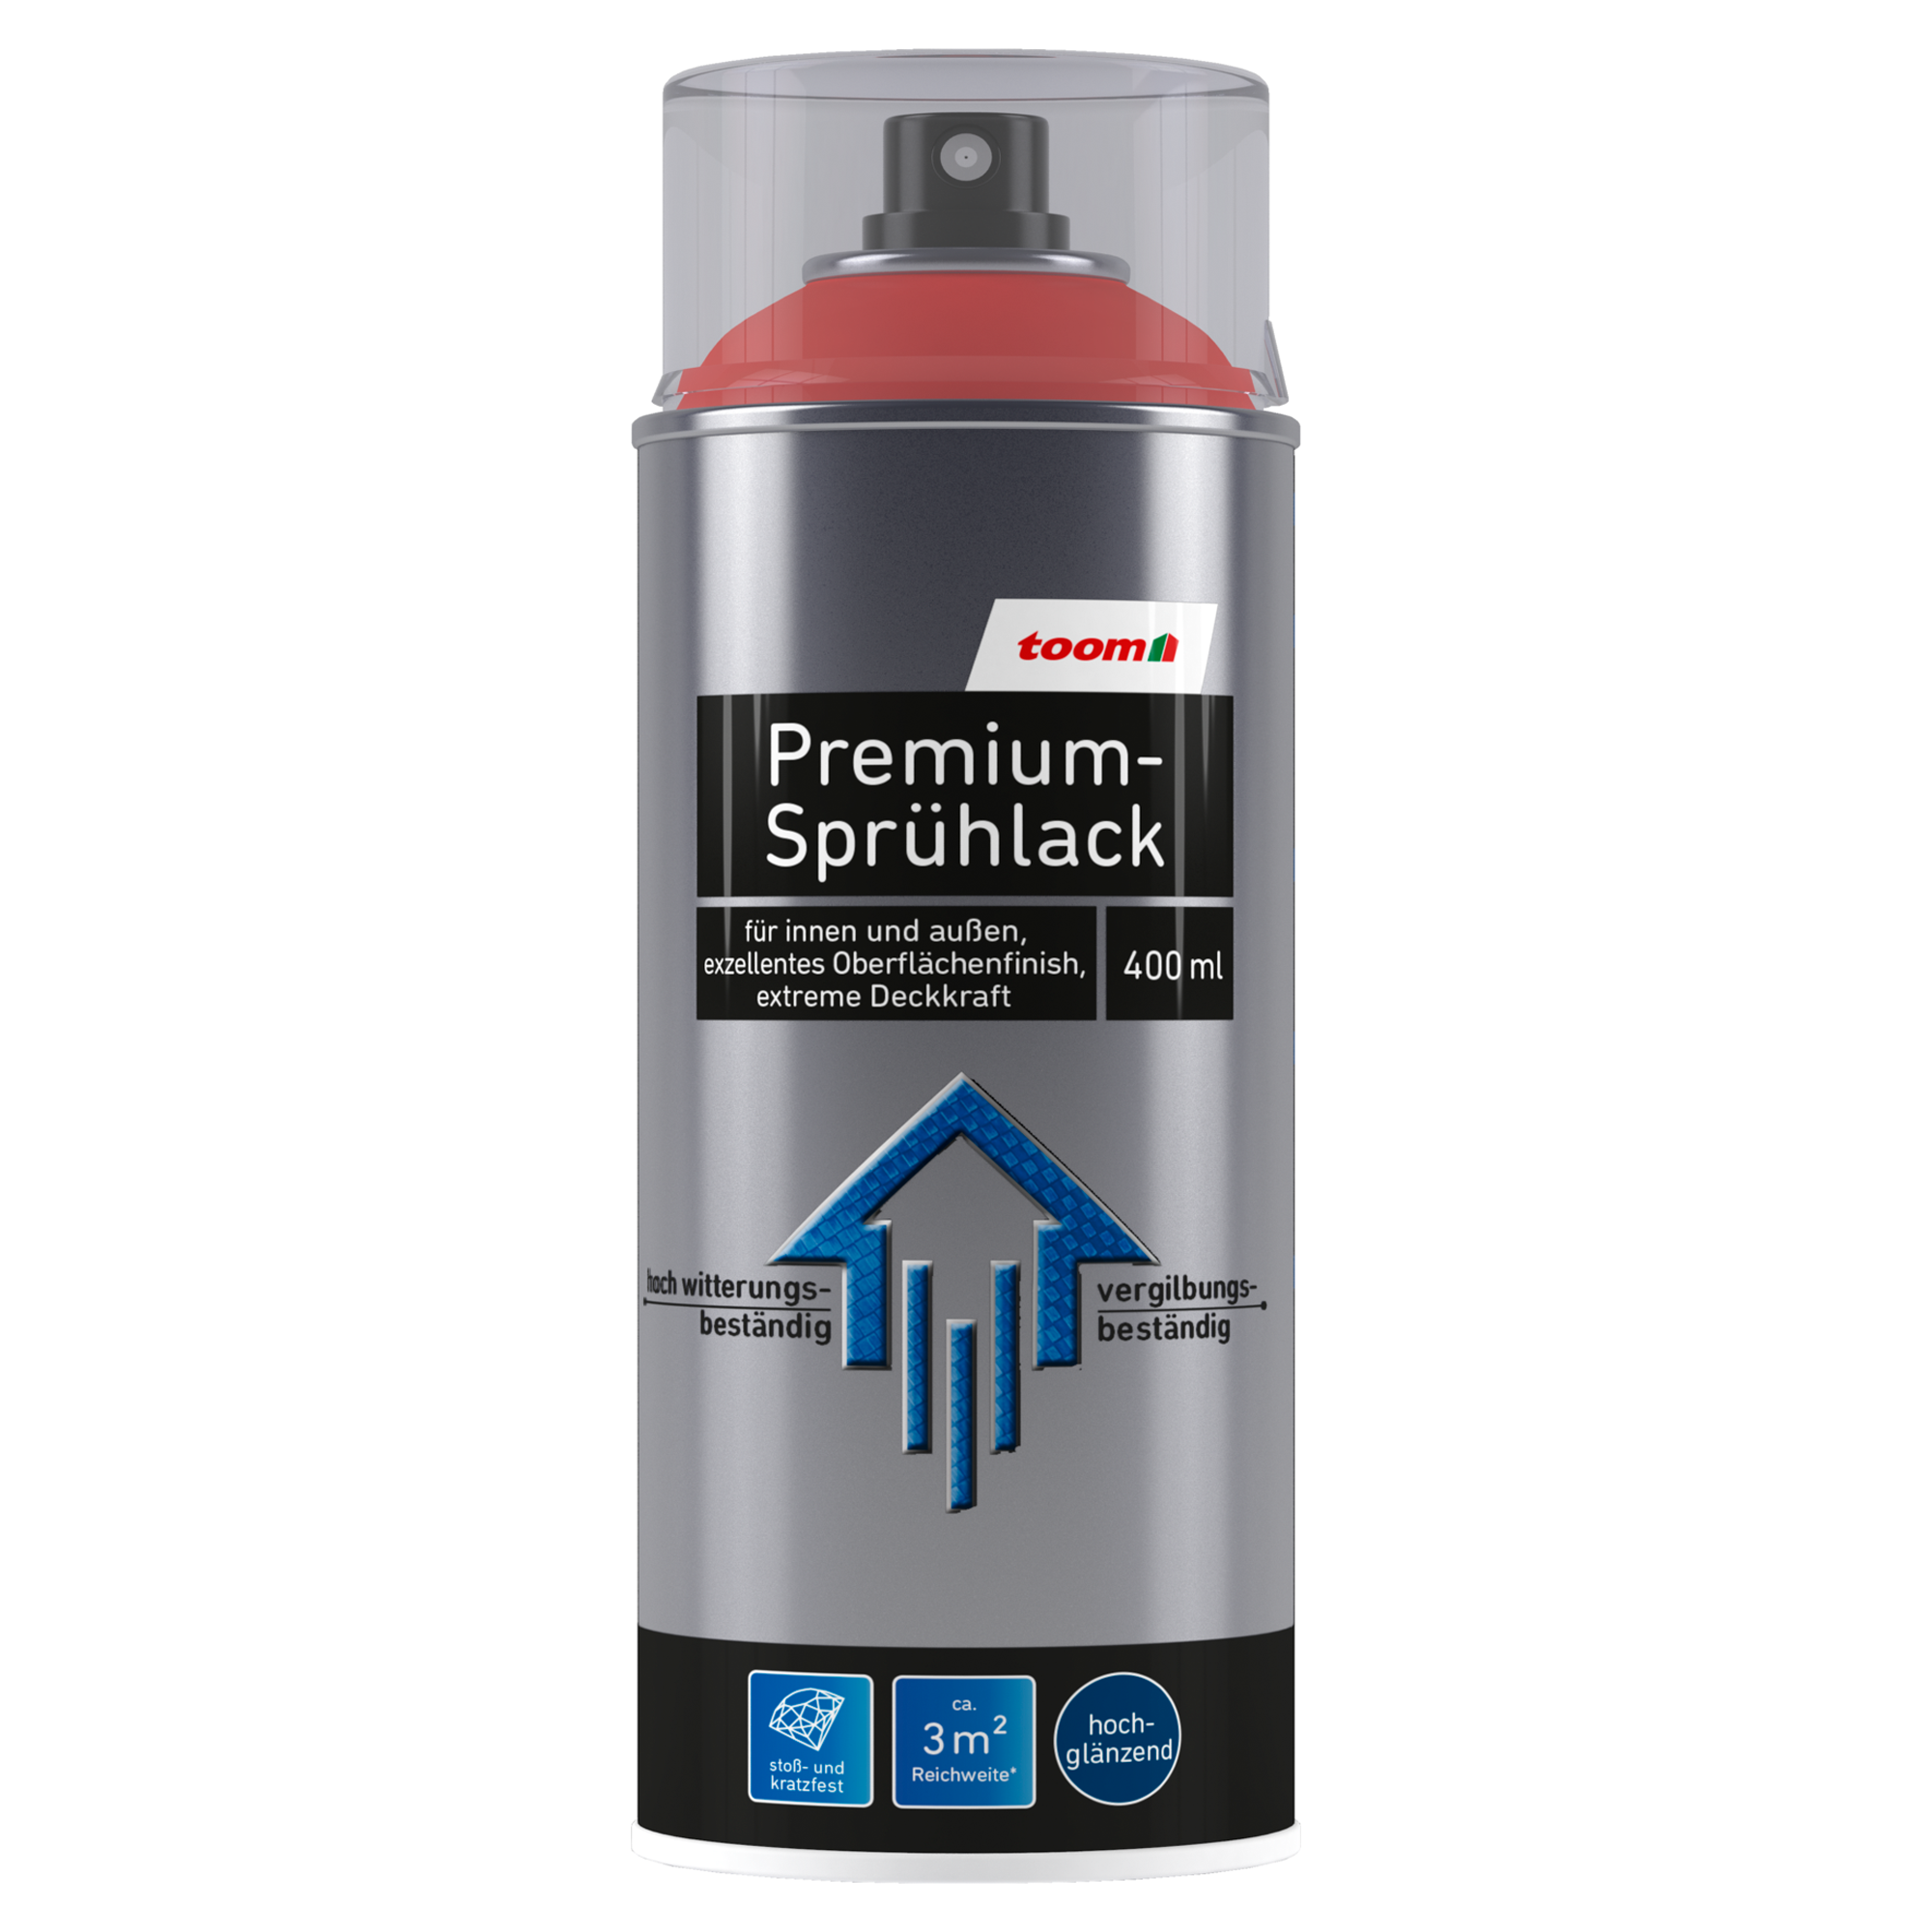 Premium-Sprühlack verkehrsrot glänzend 400 ml + product picture